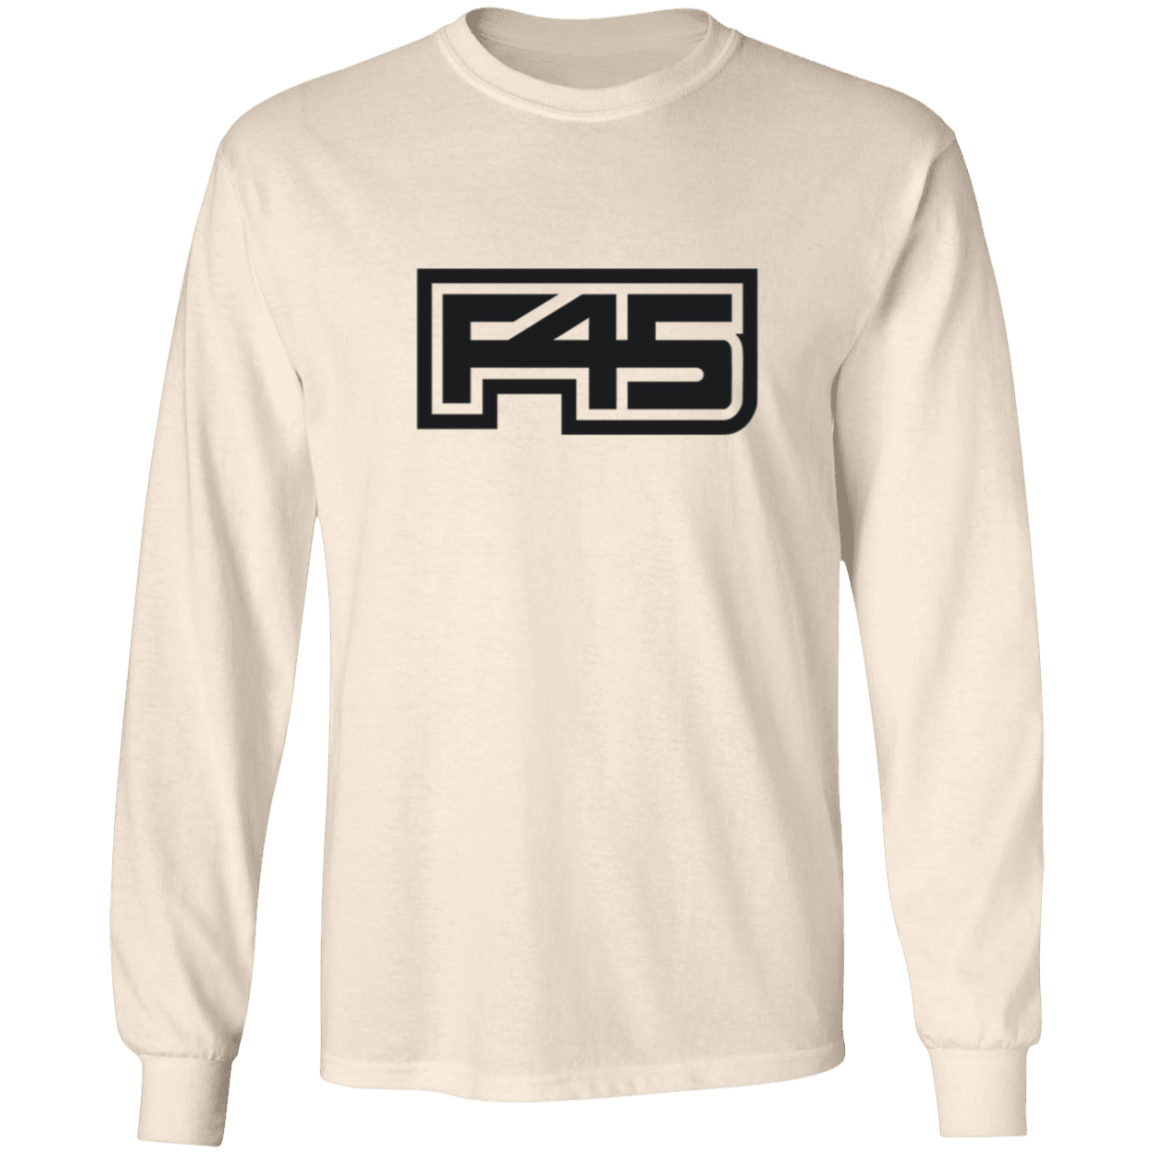 F45 LS Ultra Cotton T-Shirt